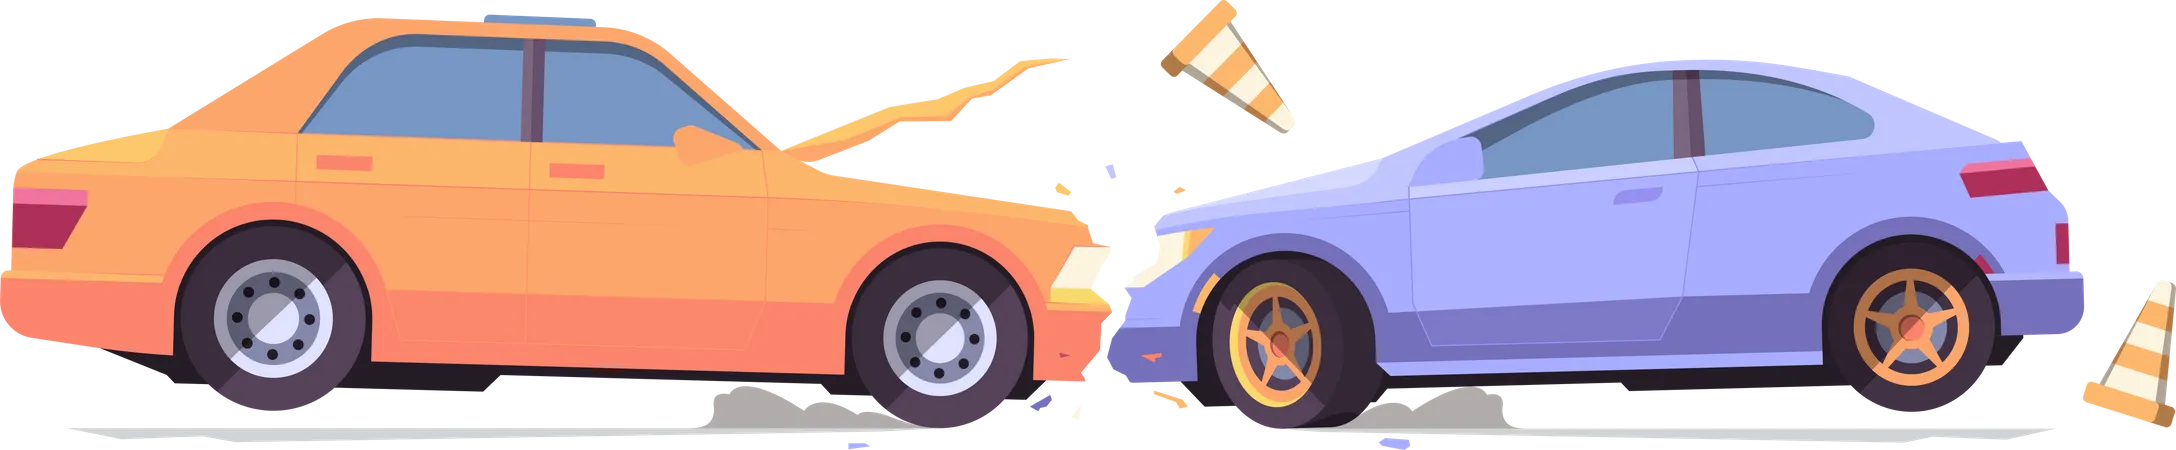 Car Accident  Illustration